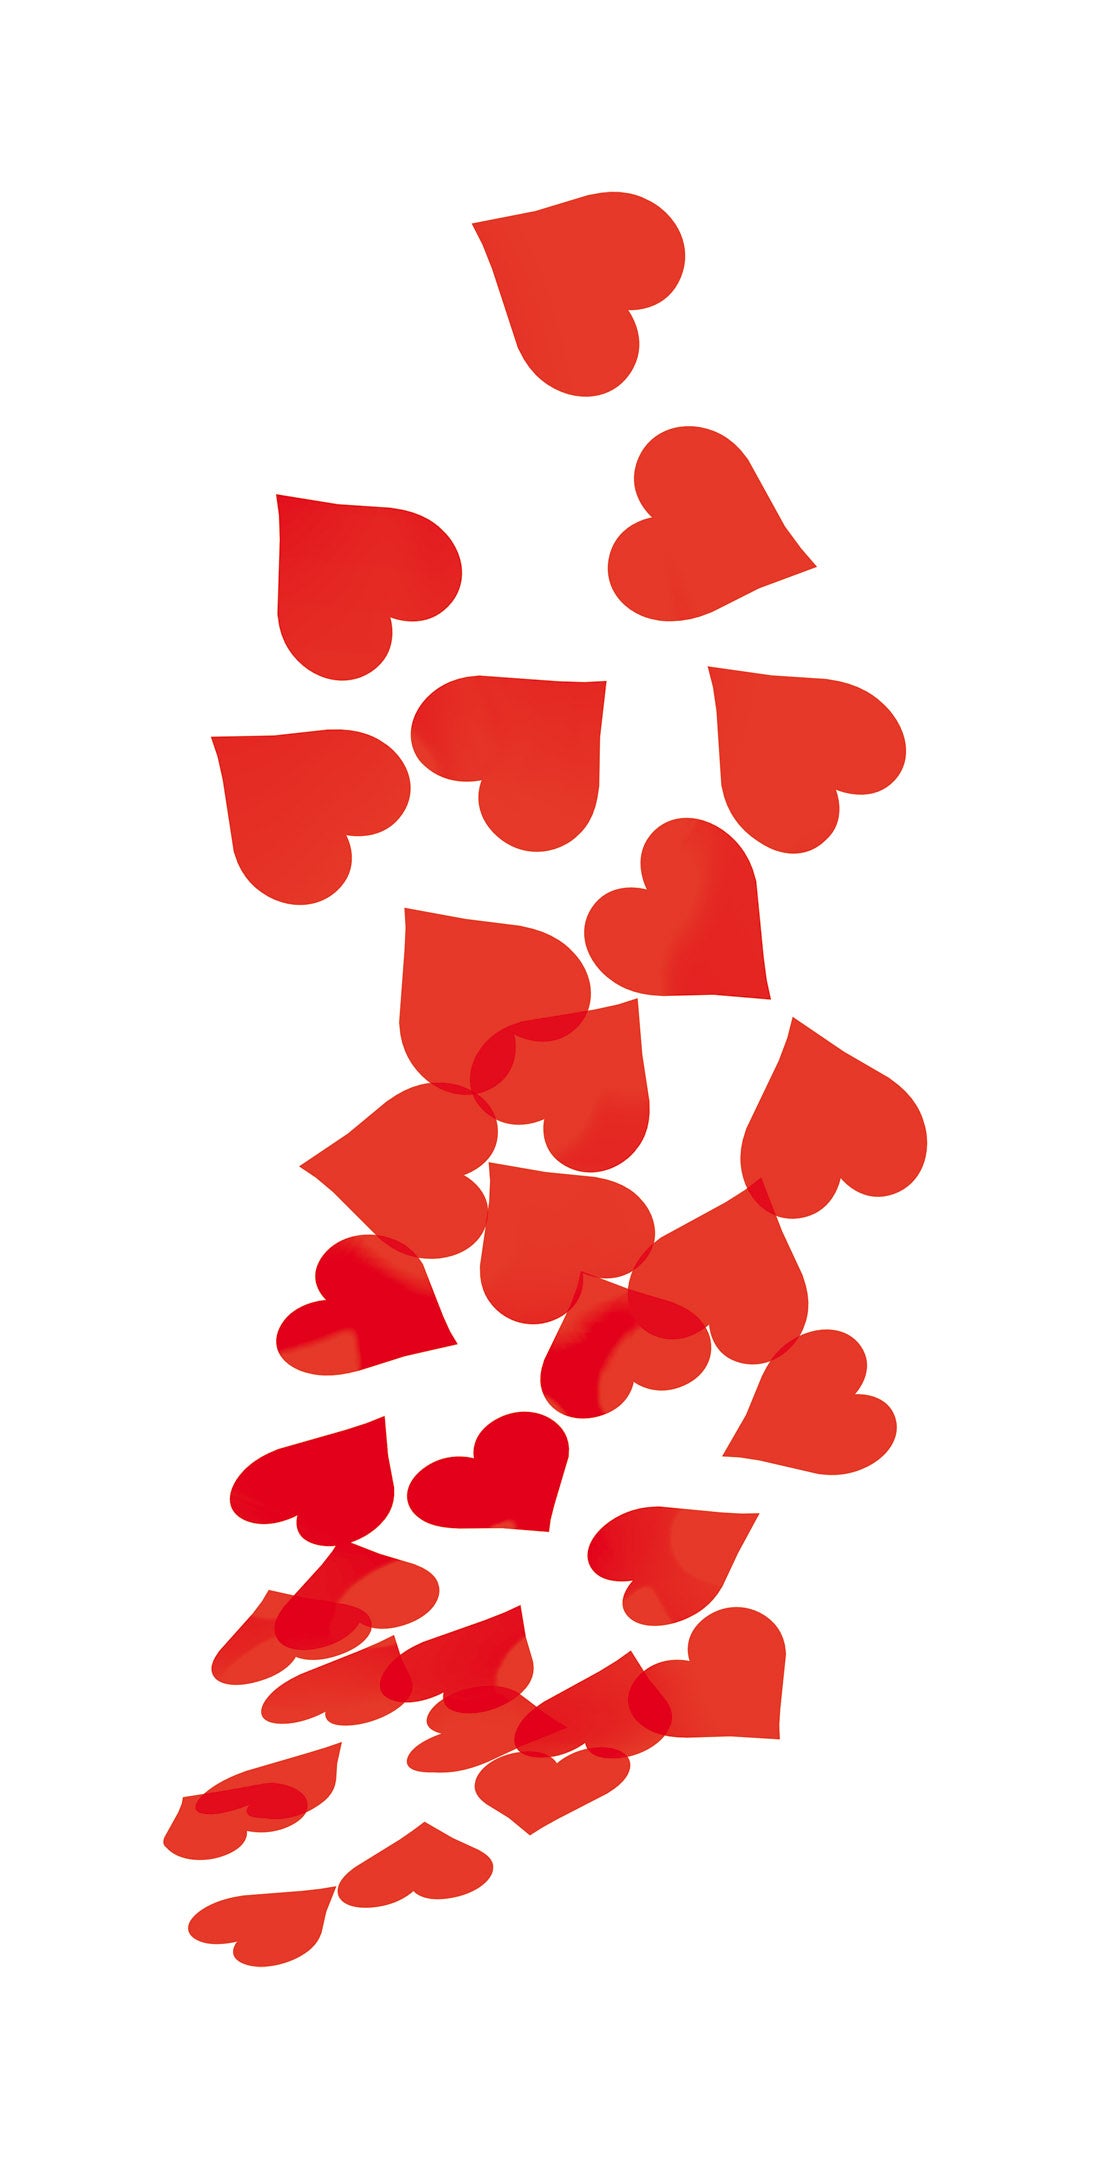 60cm Confetti Cannon Red Hearts by Trafalgar Group